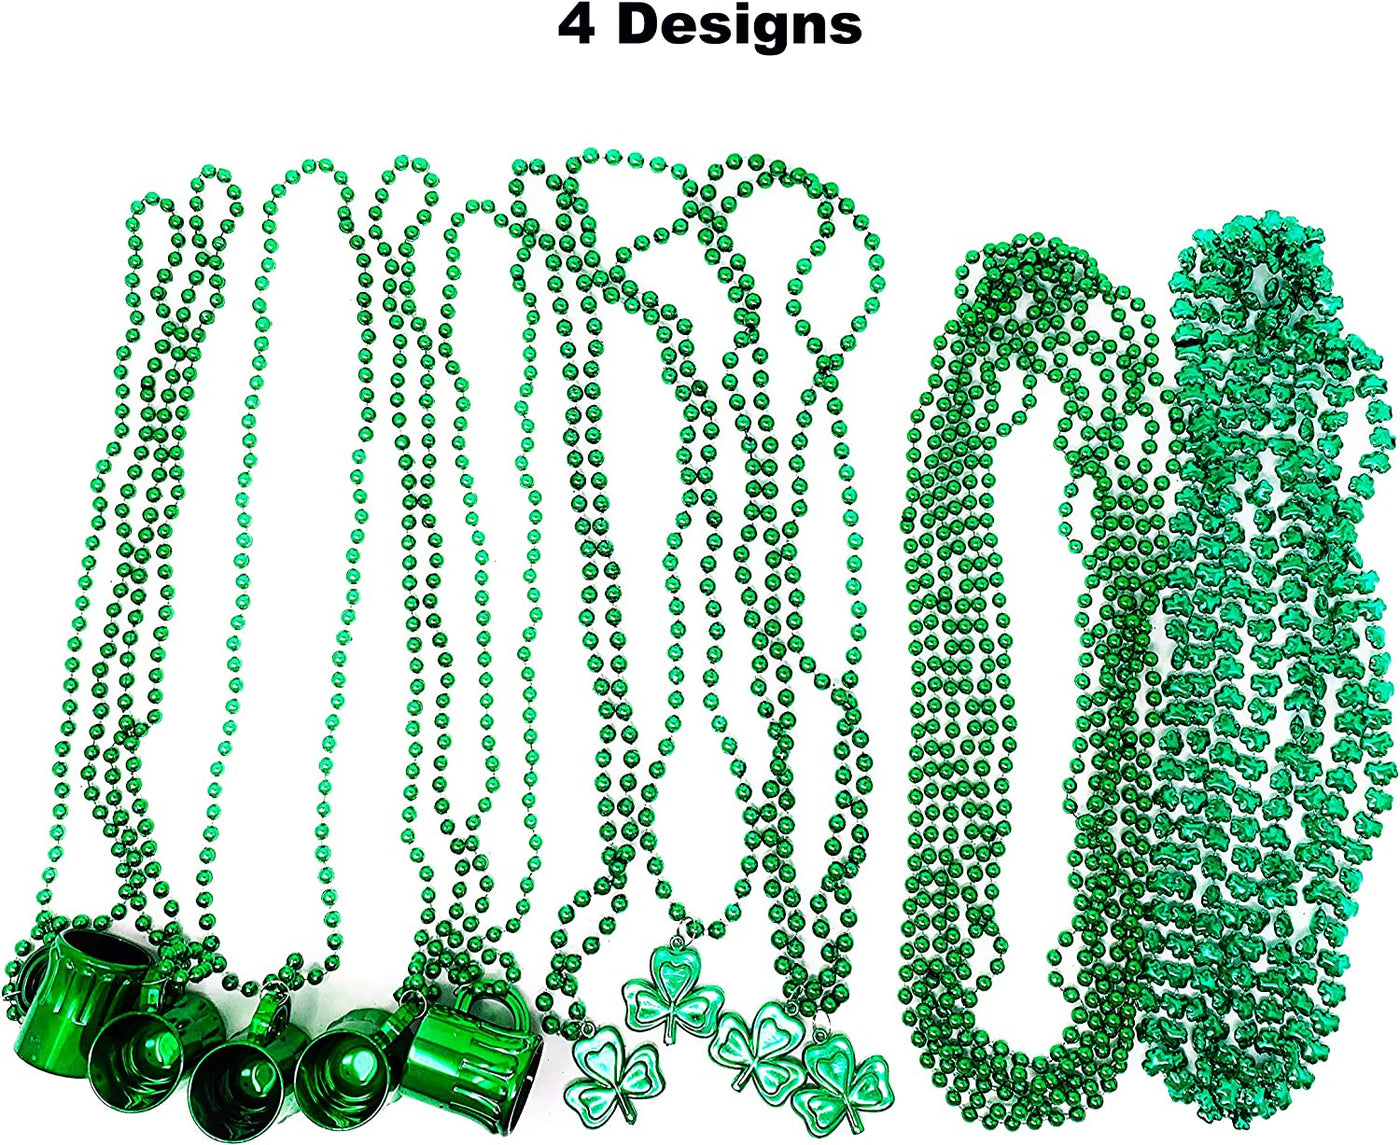 4E's Novelty St Patricks Day Beads Necklace Bulk (72 Pack) Green Shamrock Beads Shot Glass Assortment - St Patricks Day Gifts for Kids, 33" 8mm Irish Kids Party Favor Supplies Costume Accessories